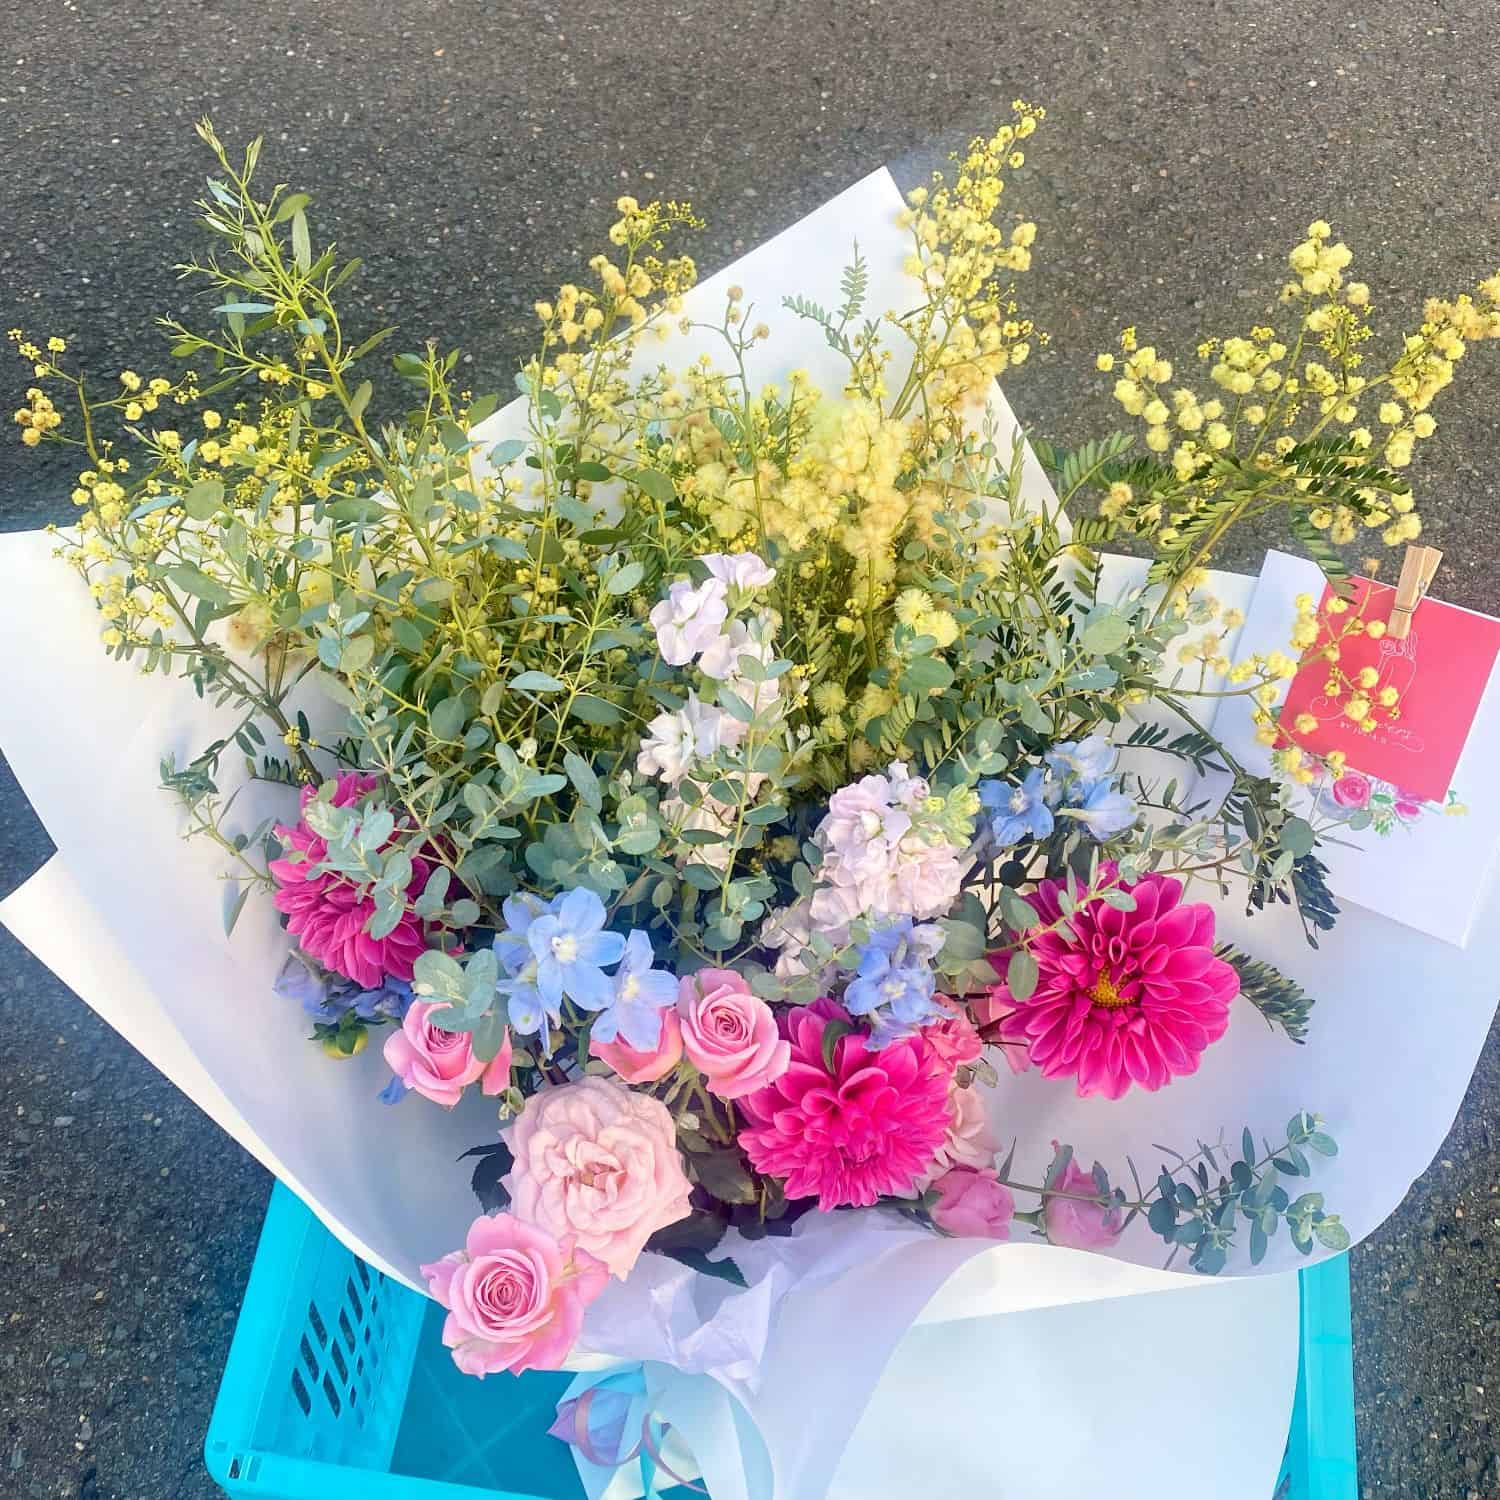 Sydney Petersham Lewisham Wedding Event Florist flowers order delivery